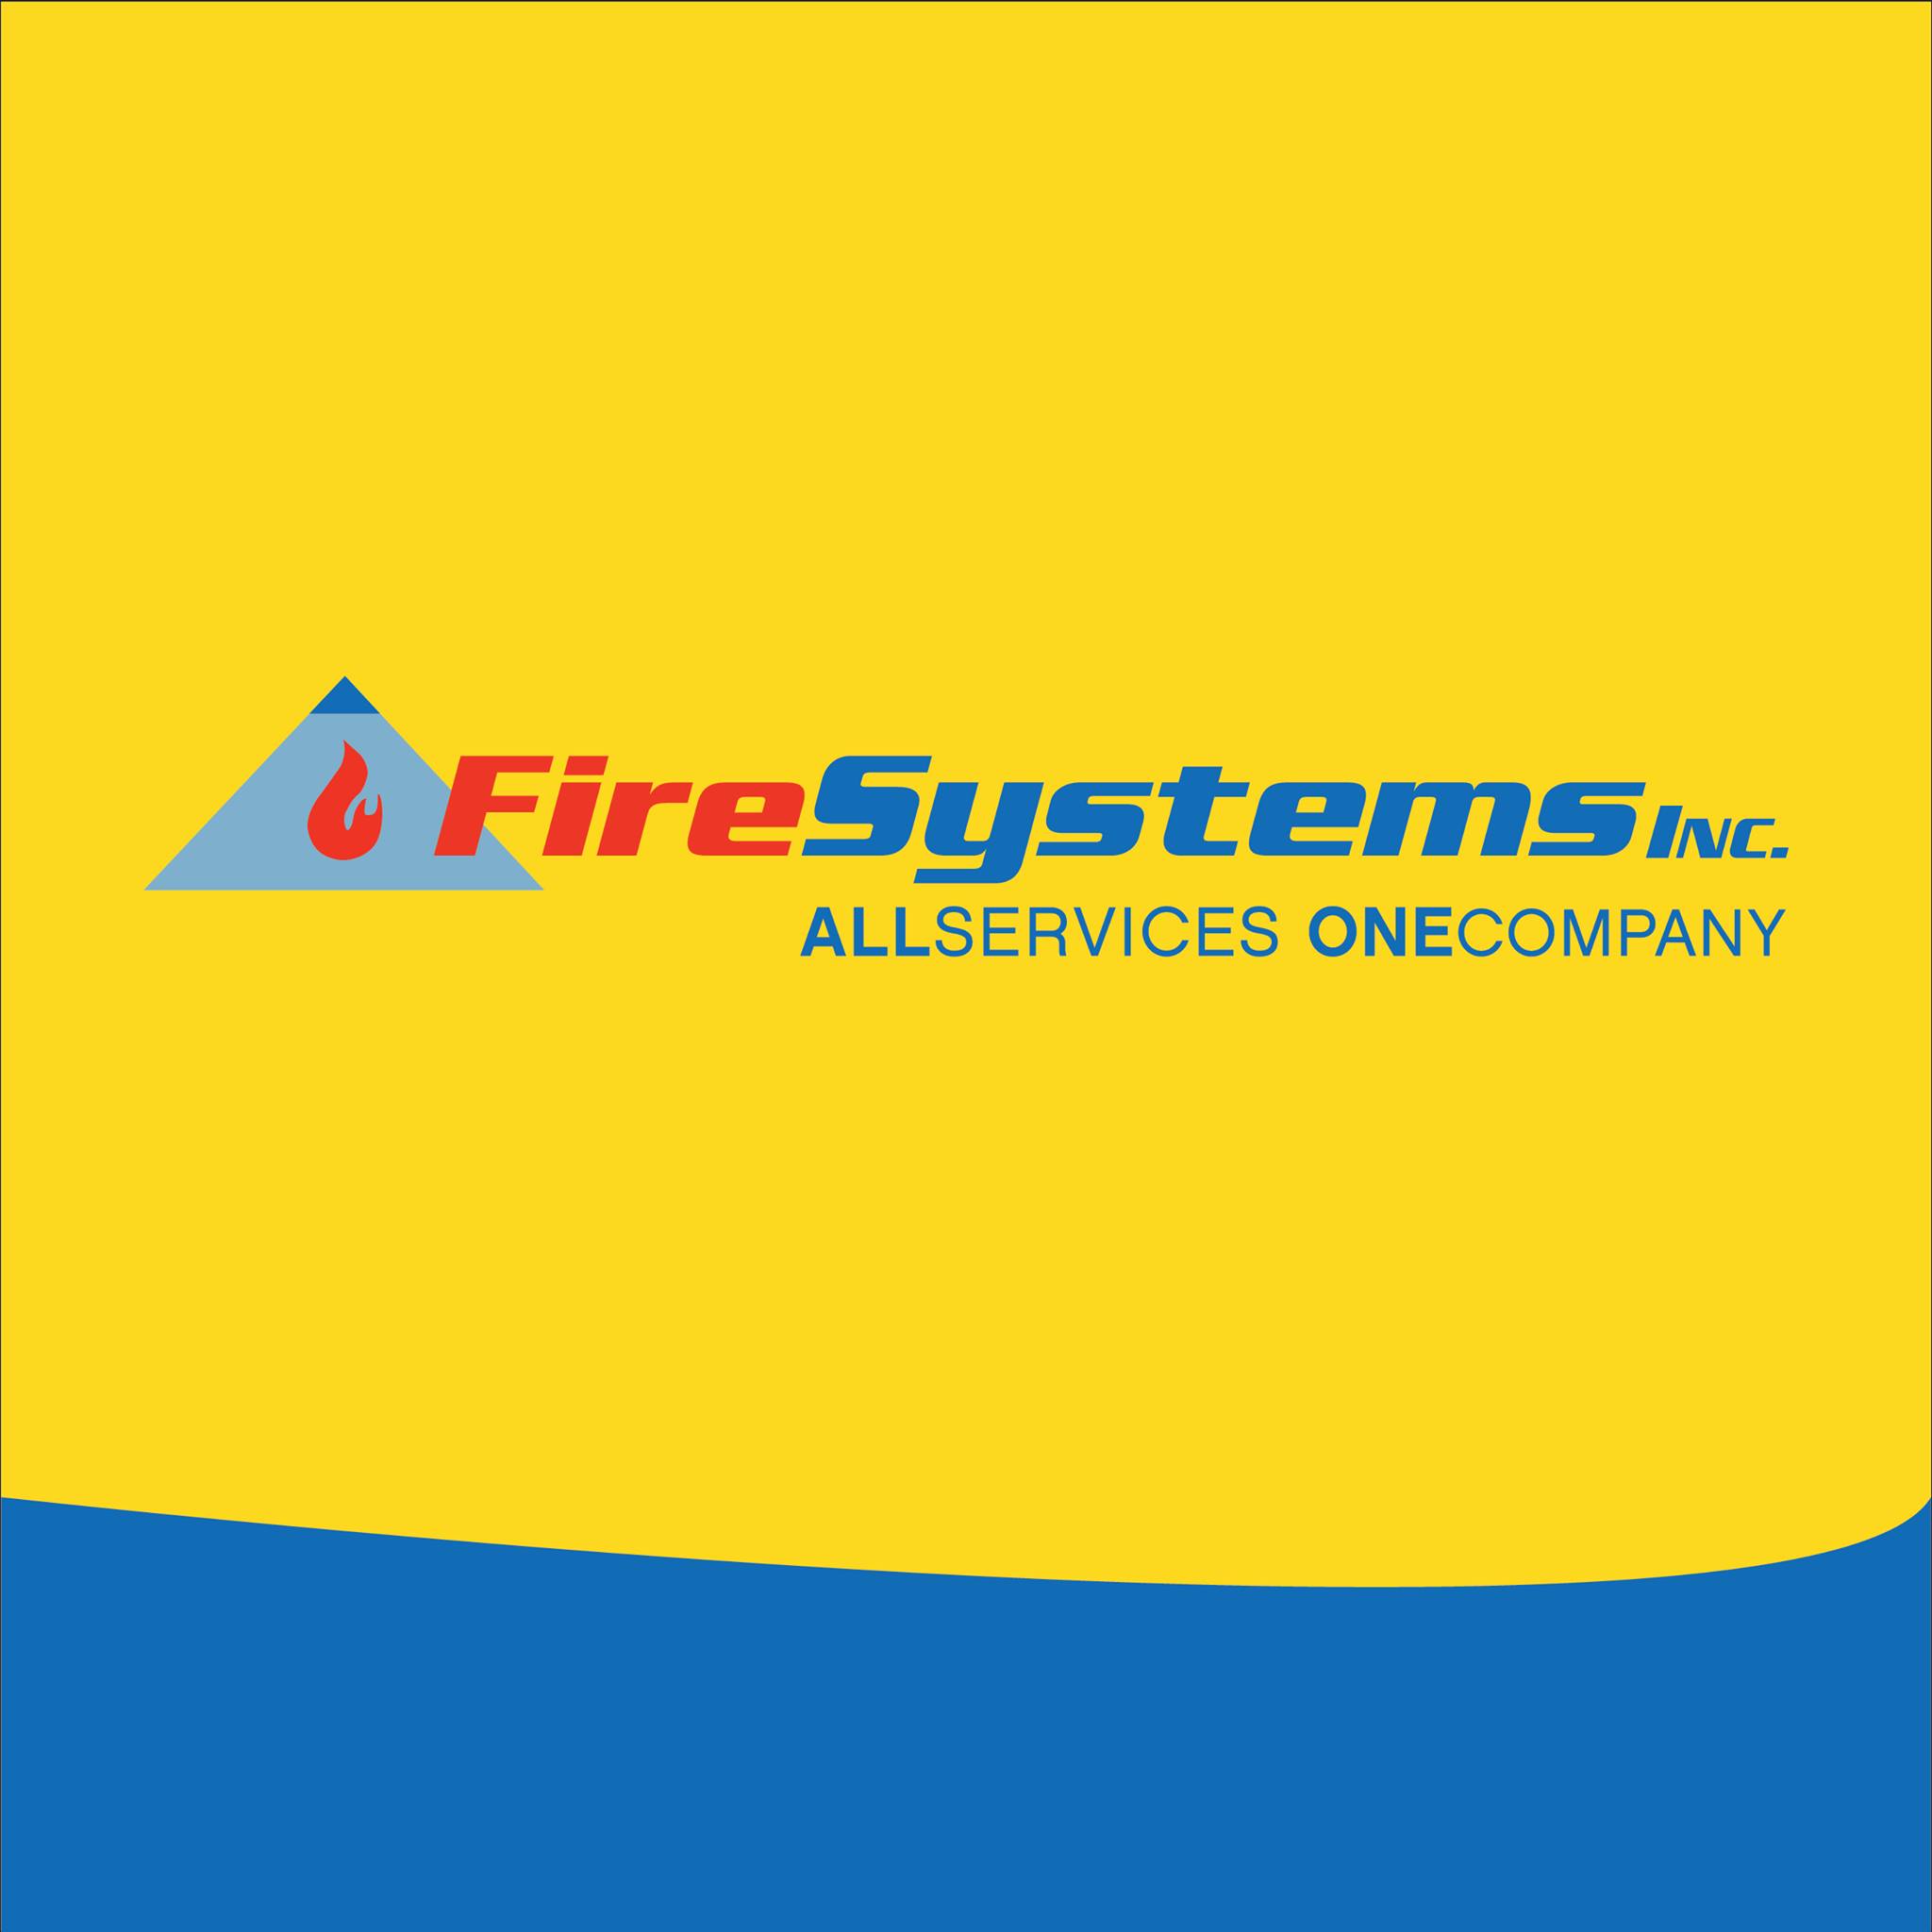 Fire Systems Company